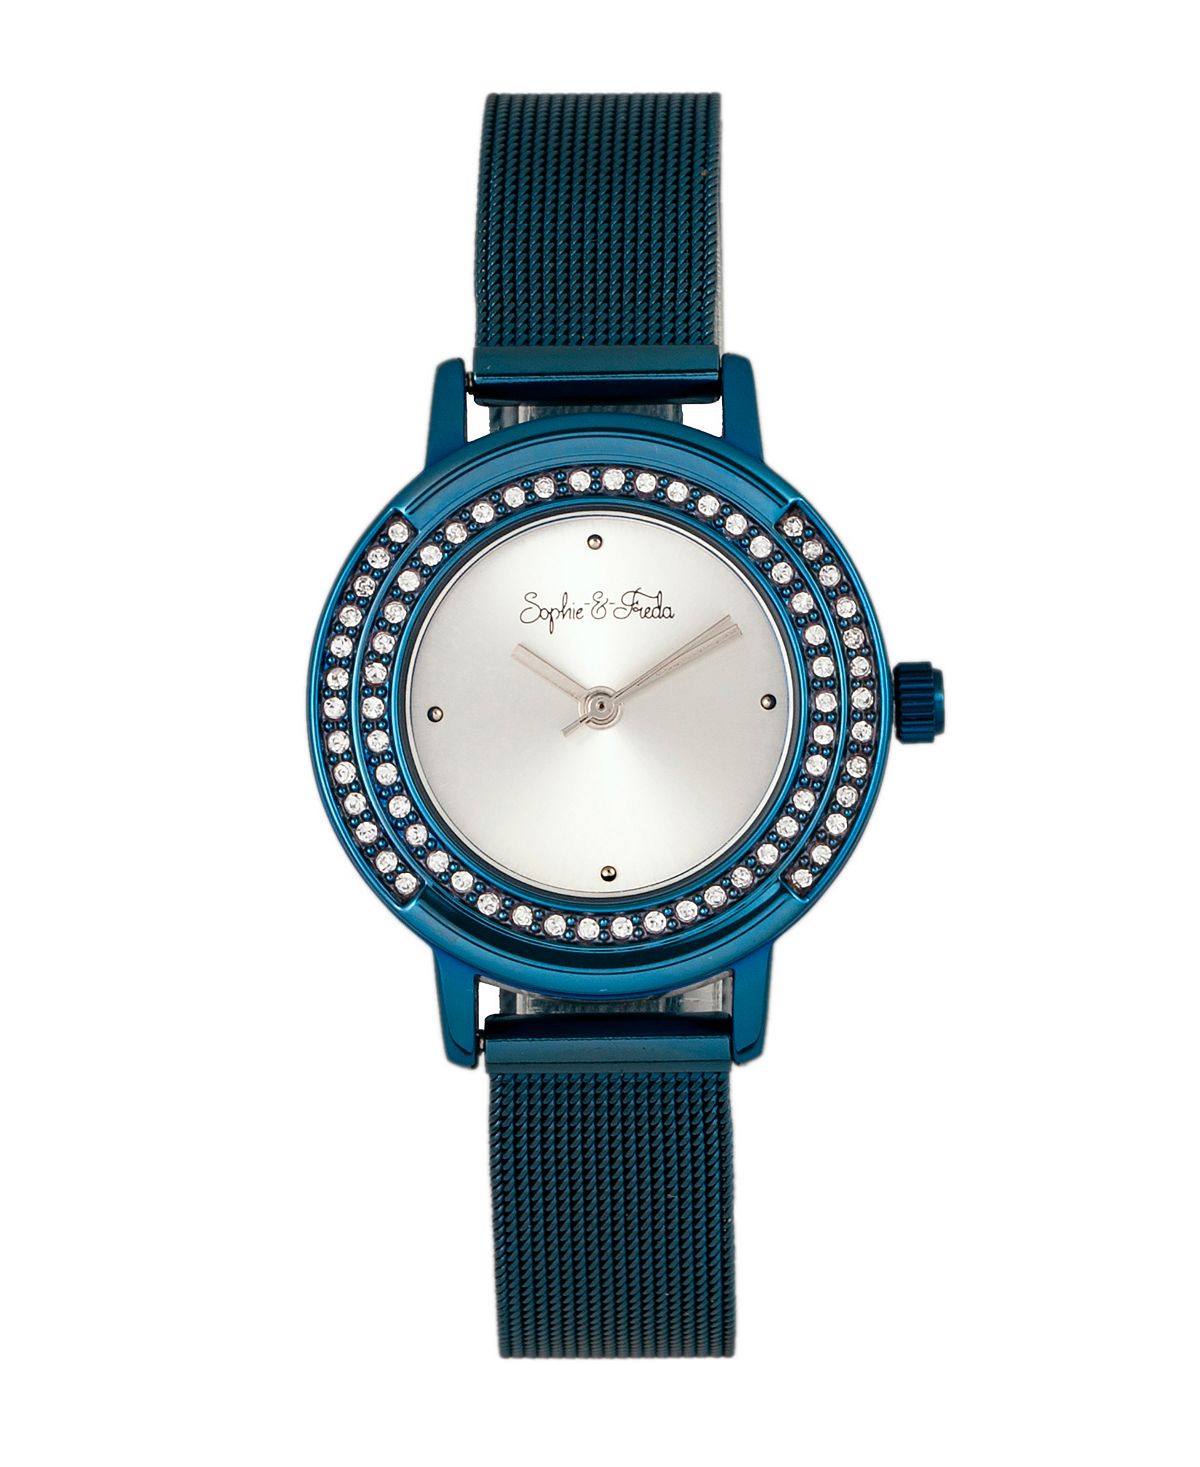 mackintosh sophie blue ticket Кварцевые часы из кембриджского сплава 28 мм Sophie and Freda, синий